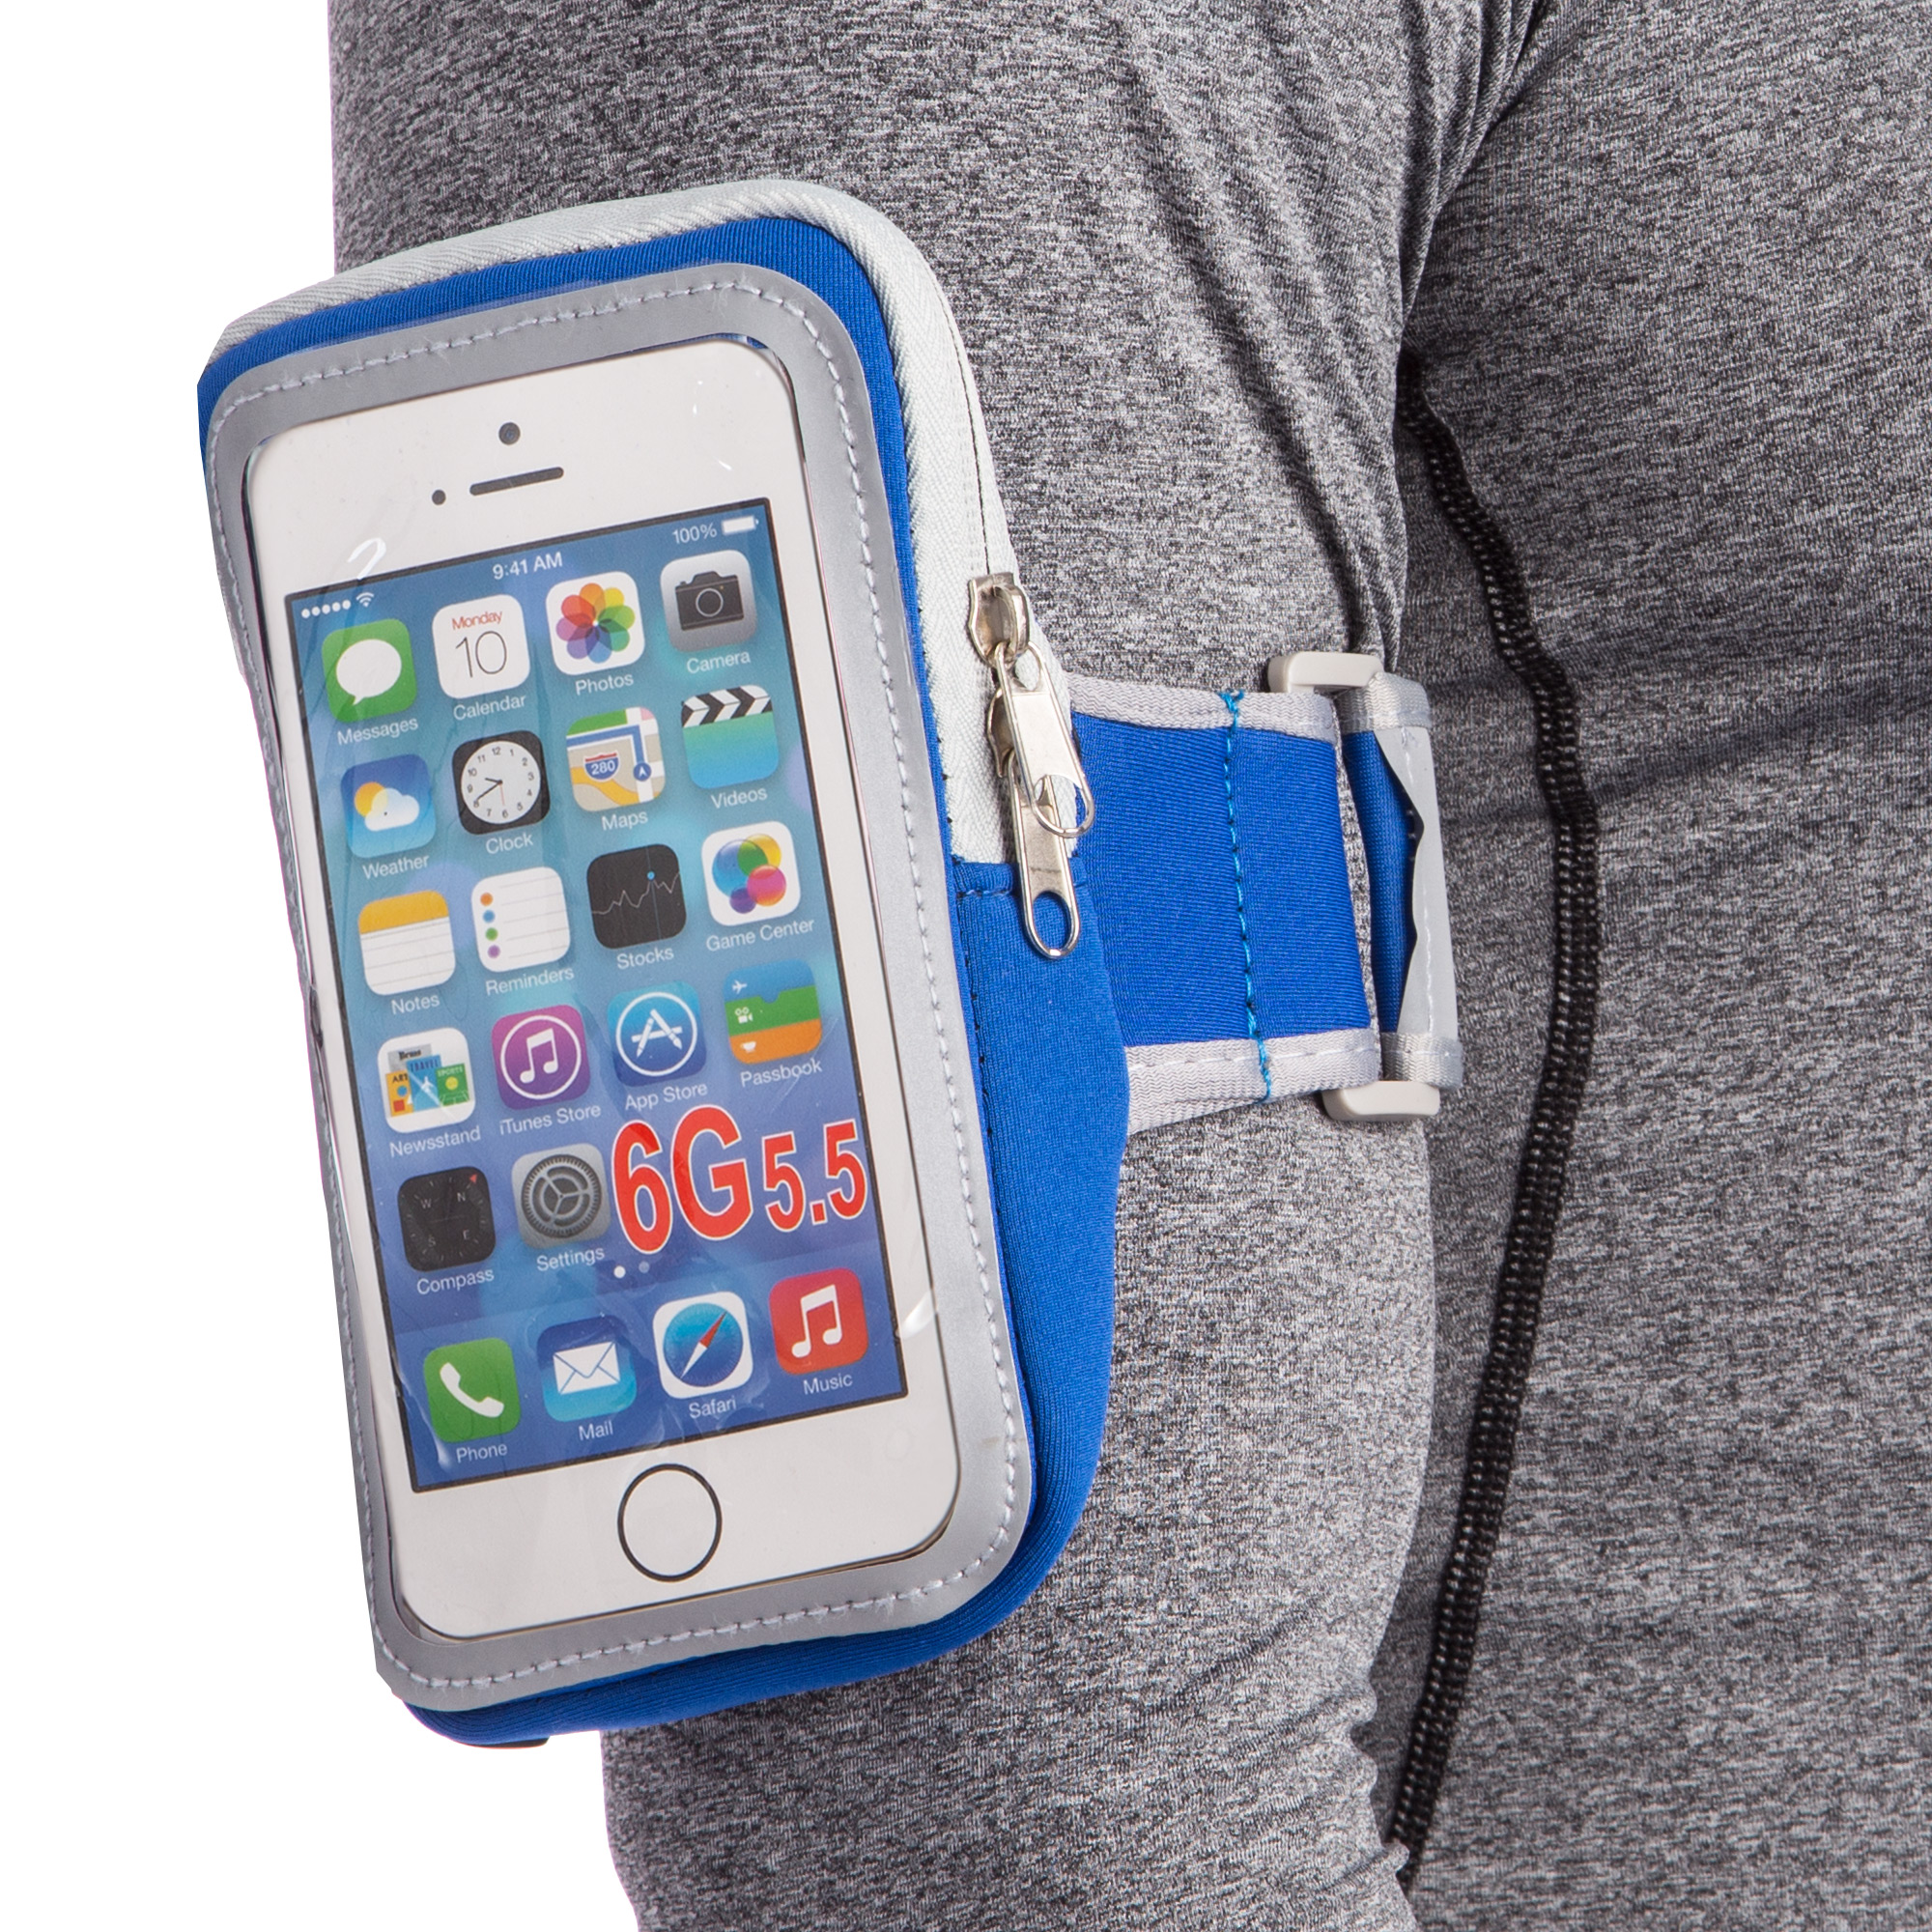 Чехол для телефона с креплением на руку для занятий спортом planeta-sport GA-6384 для iPhone и iPod 18x7см Синий